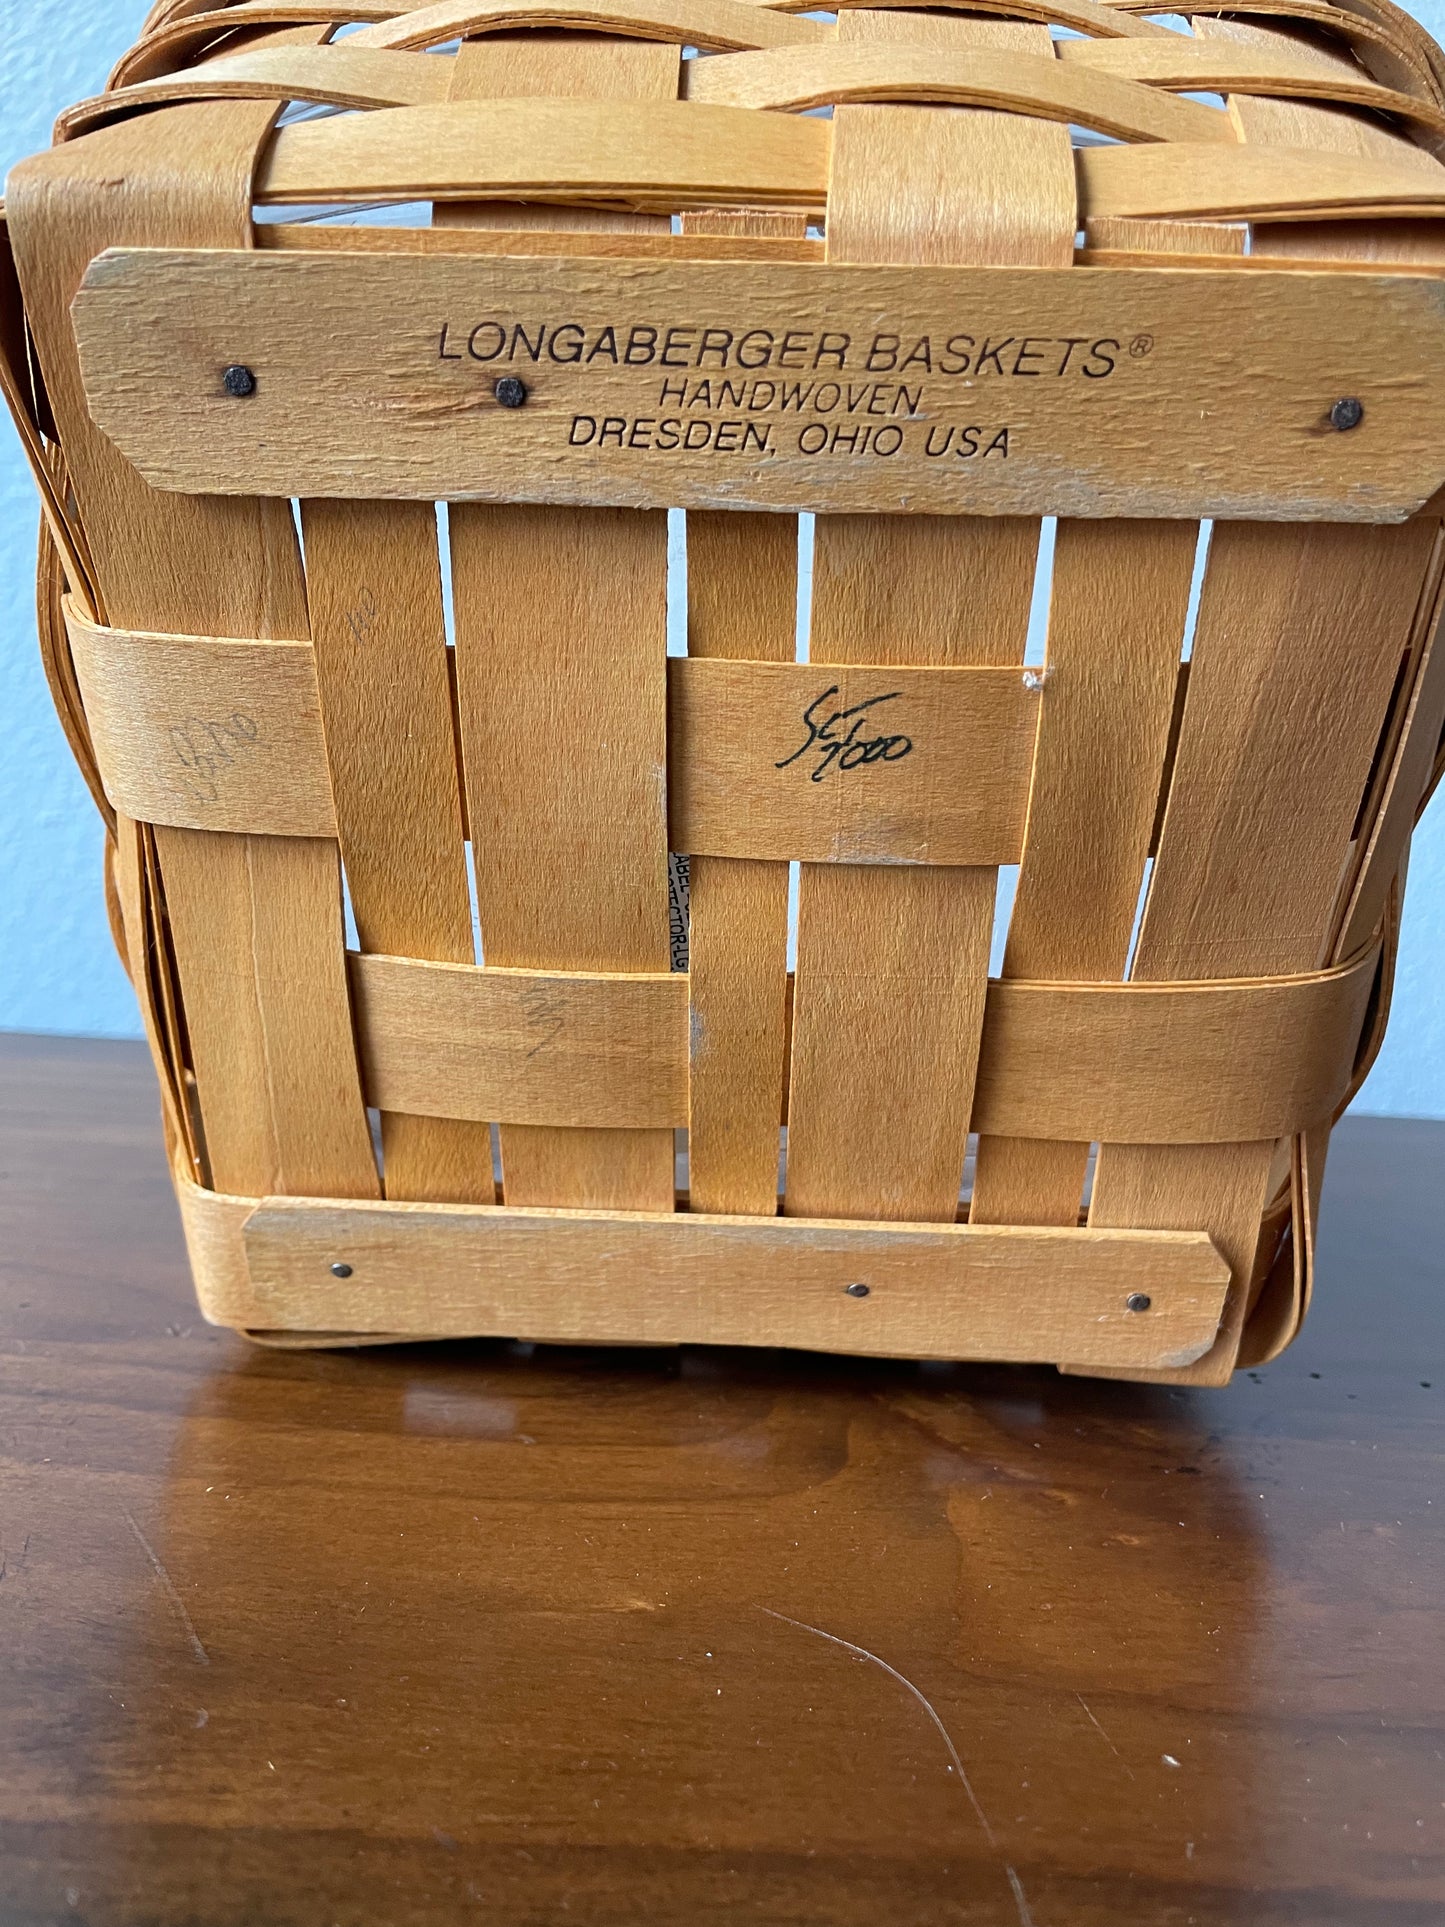 Longaberger "Large Berry" Lined Basket